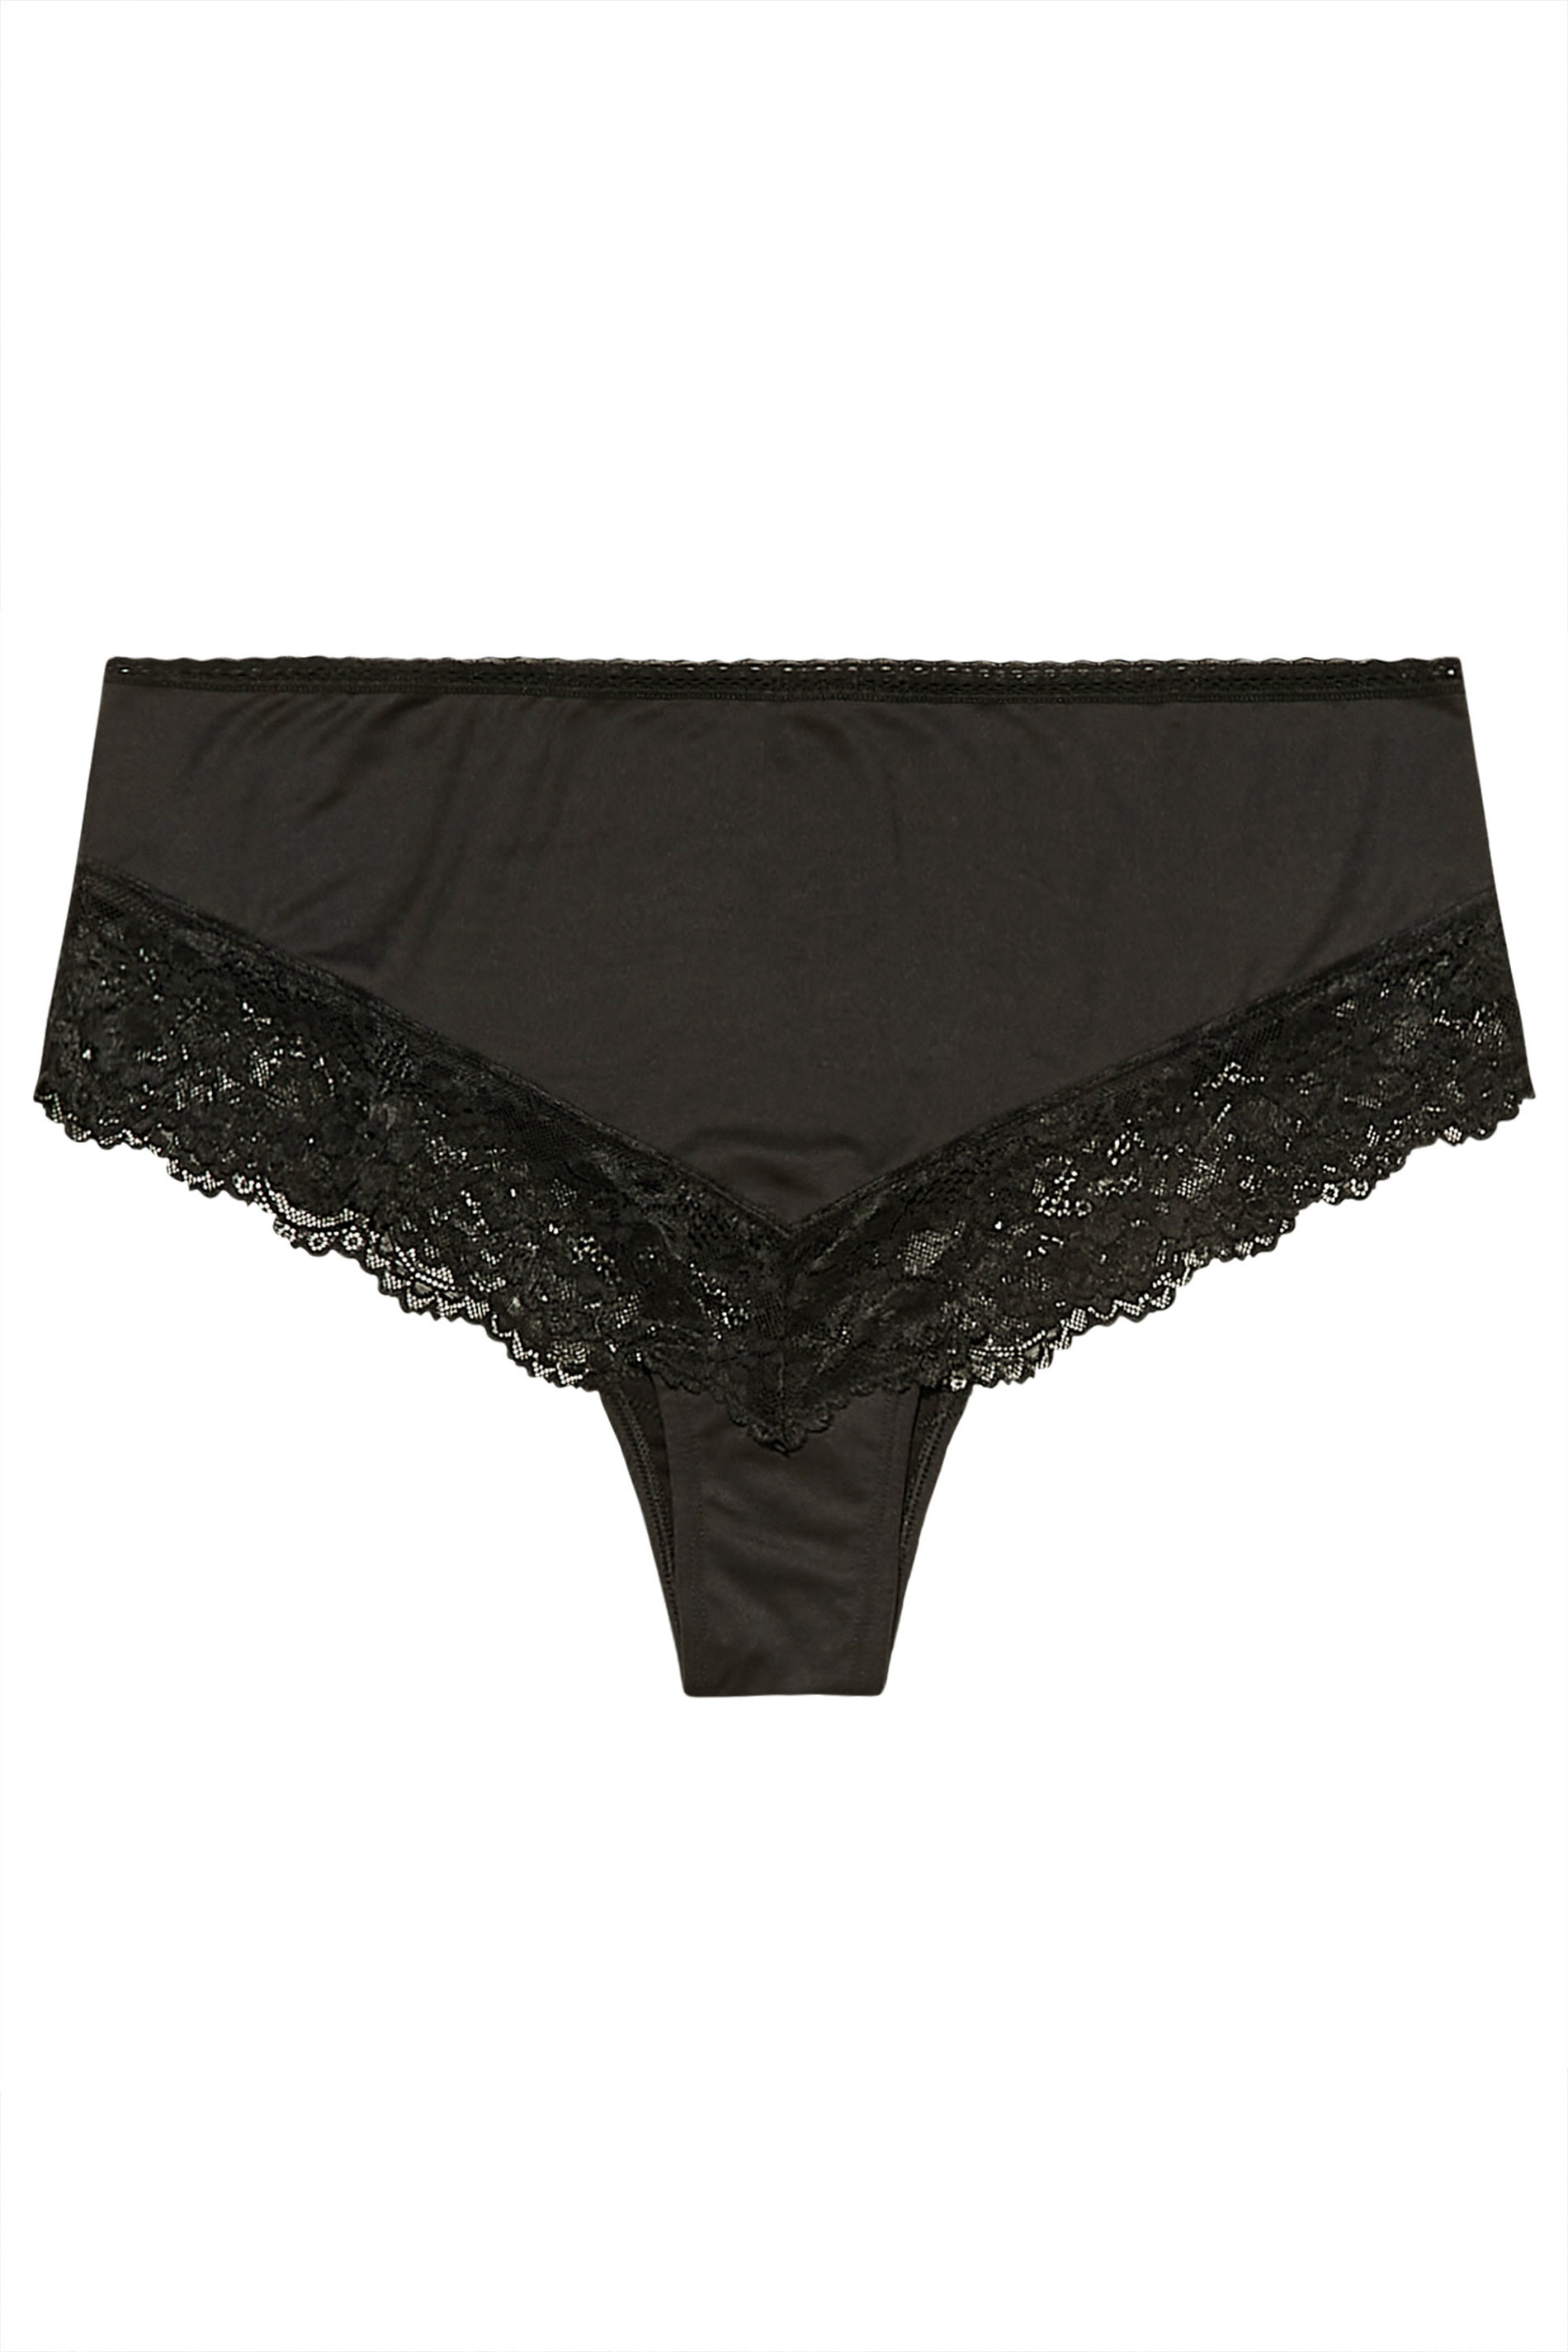 Plus Size Black Lace Trim High Waisted Brazilian Shorts | Yours Clothing 3